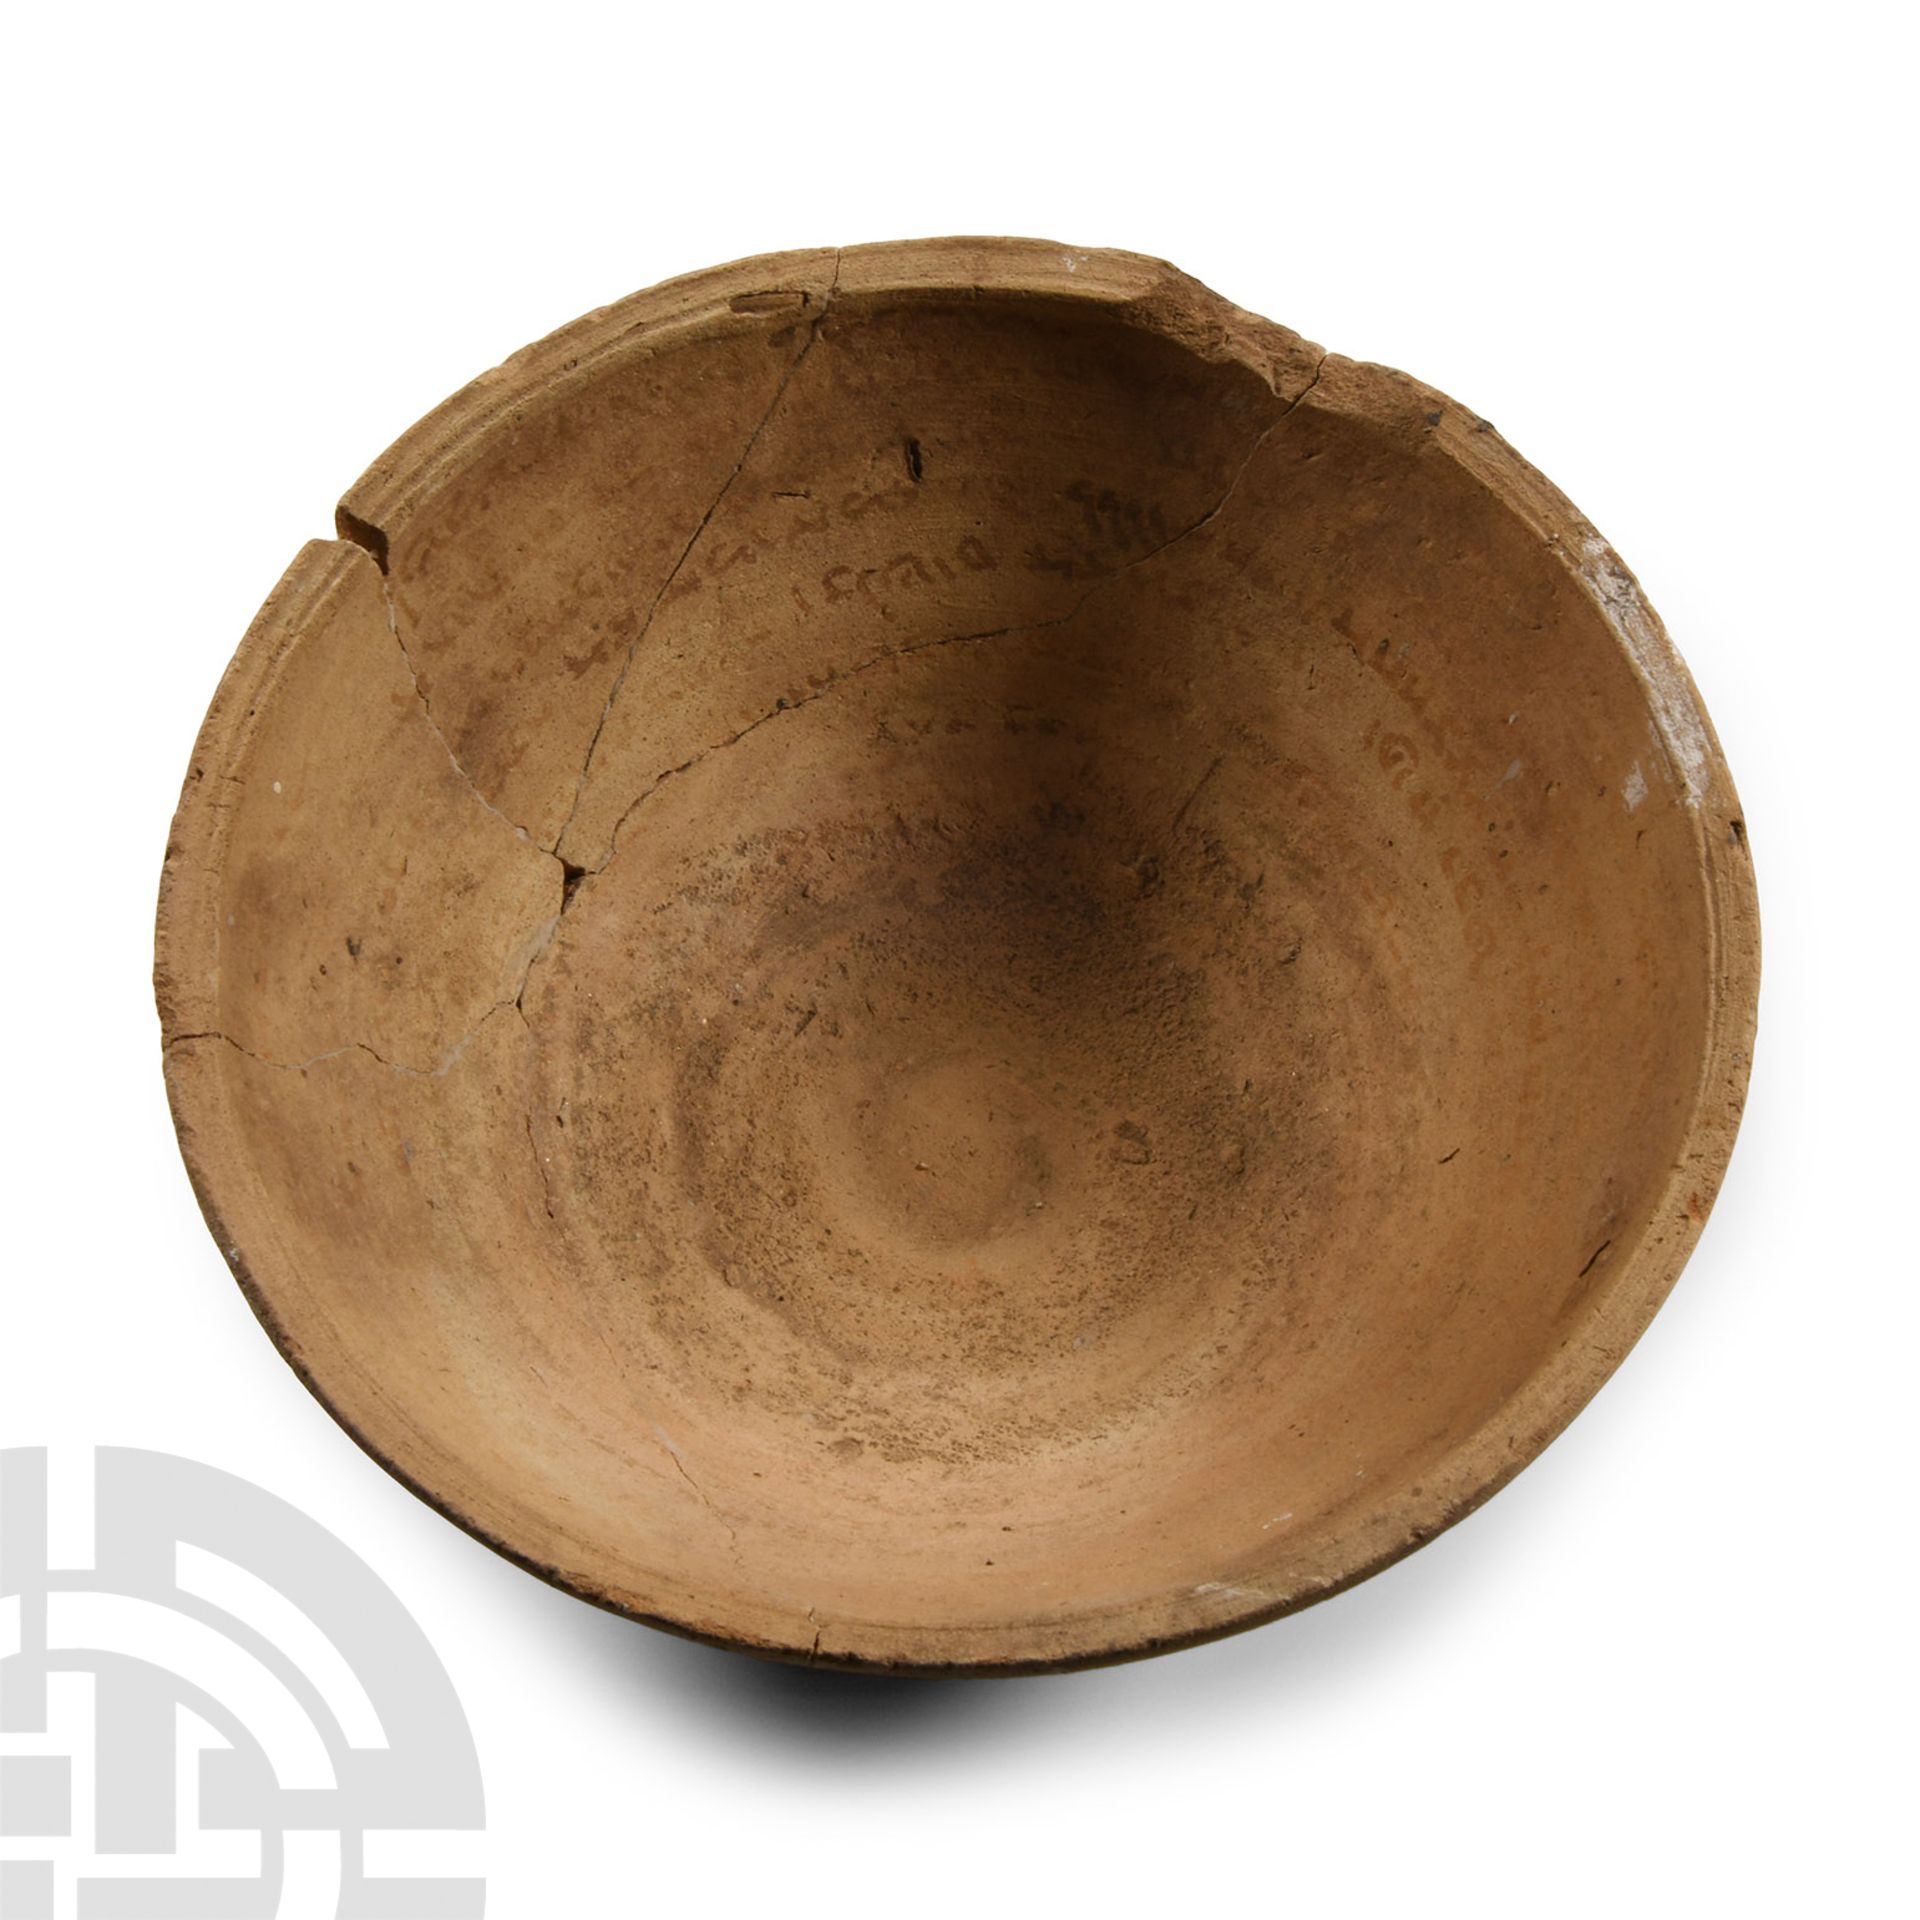 Aramaic Terracotta Bowl with Magical Incantation